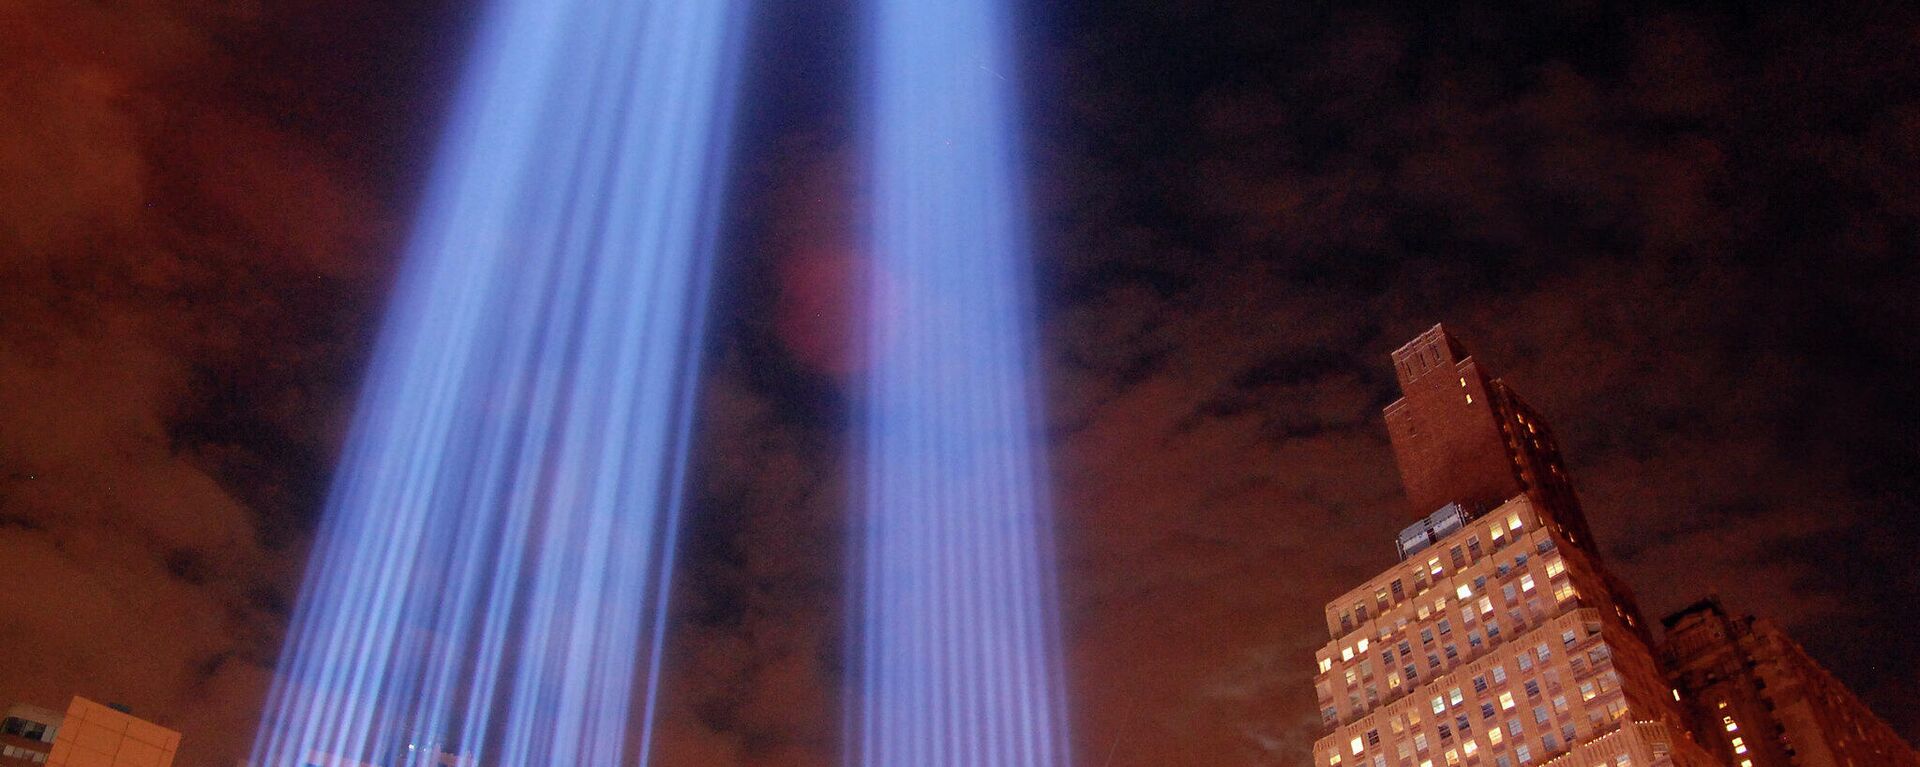 9/11 Tribute in Light  - Sputnik International, 1920, 11.09.2021